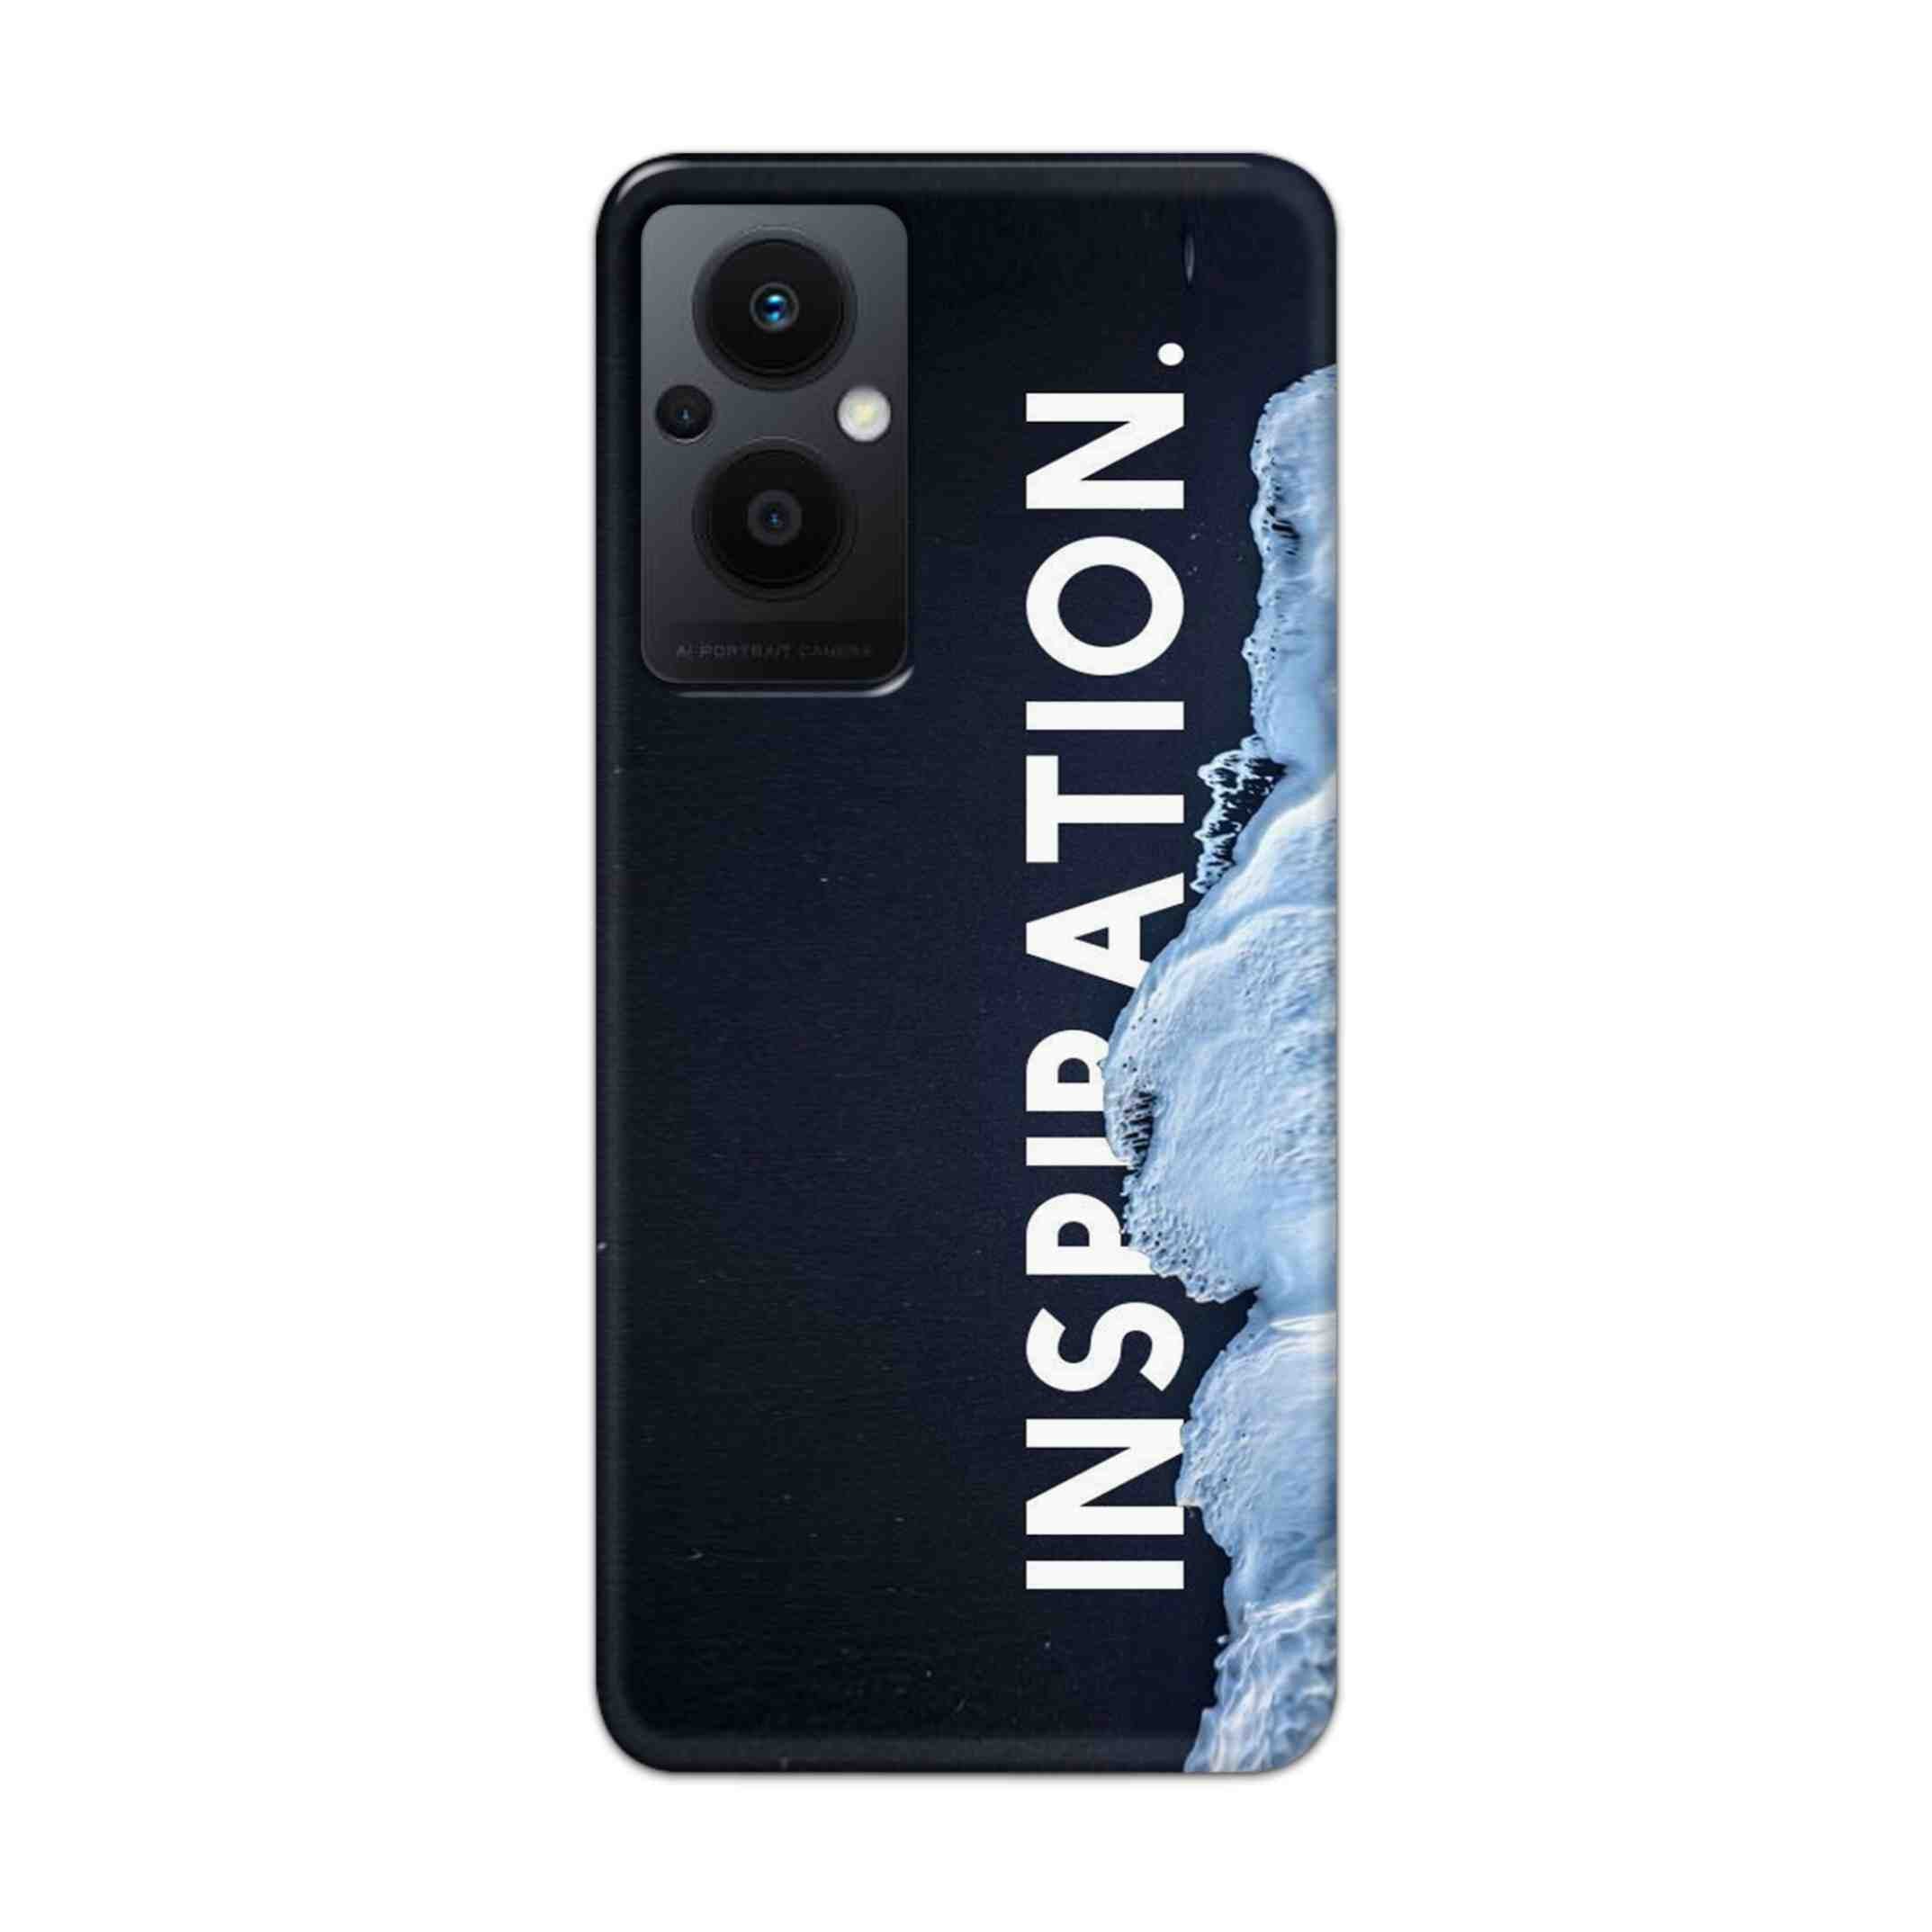 Buy Inspiration Hard Back Mobile Phone Case Cover For Oppo F21 pro 5G Online